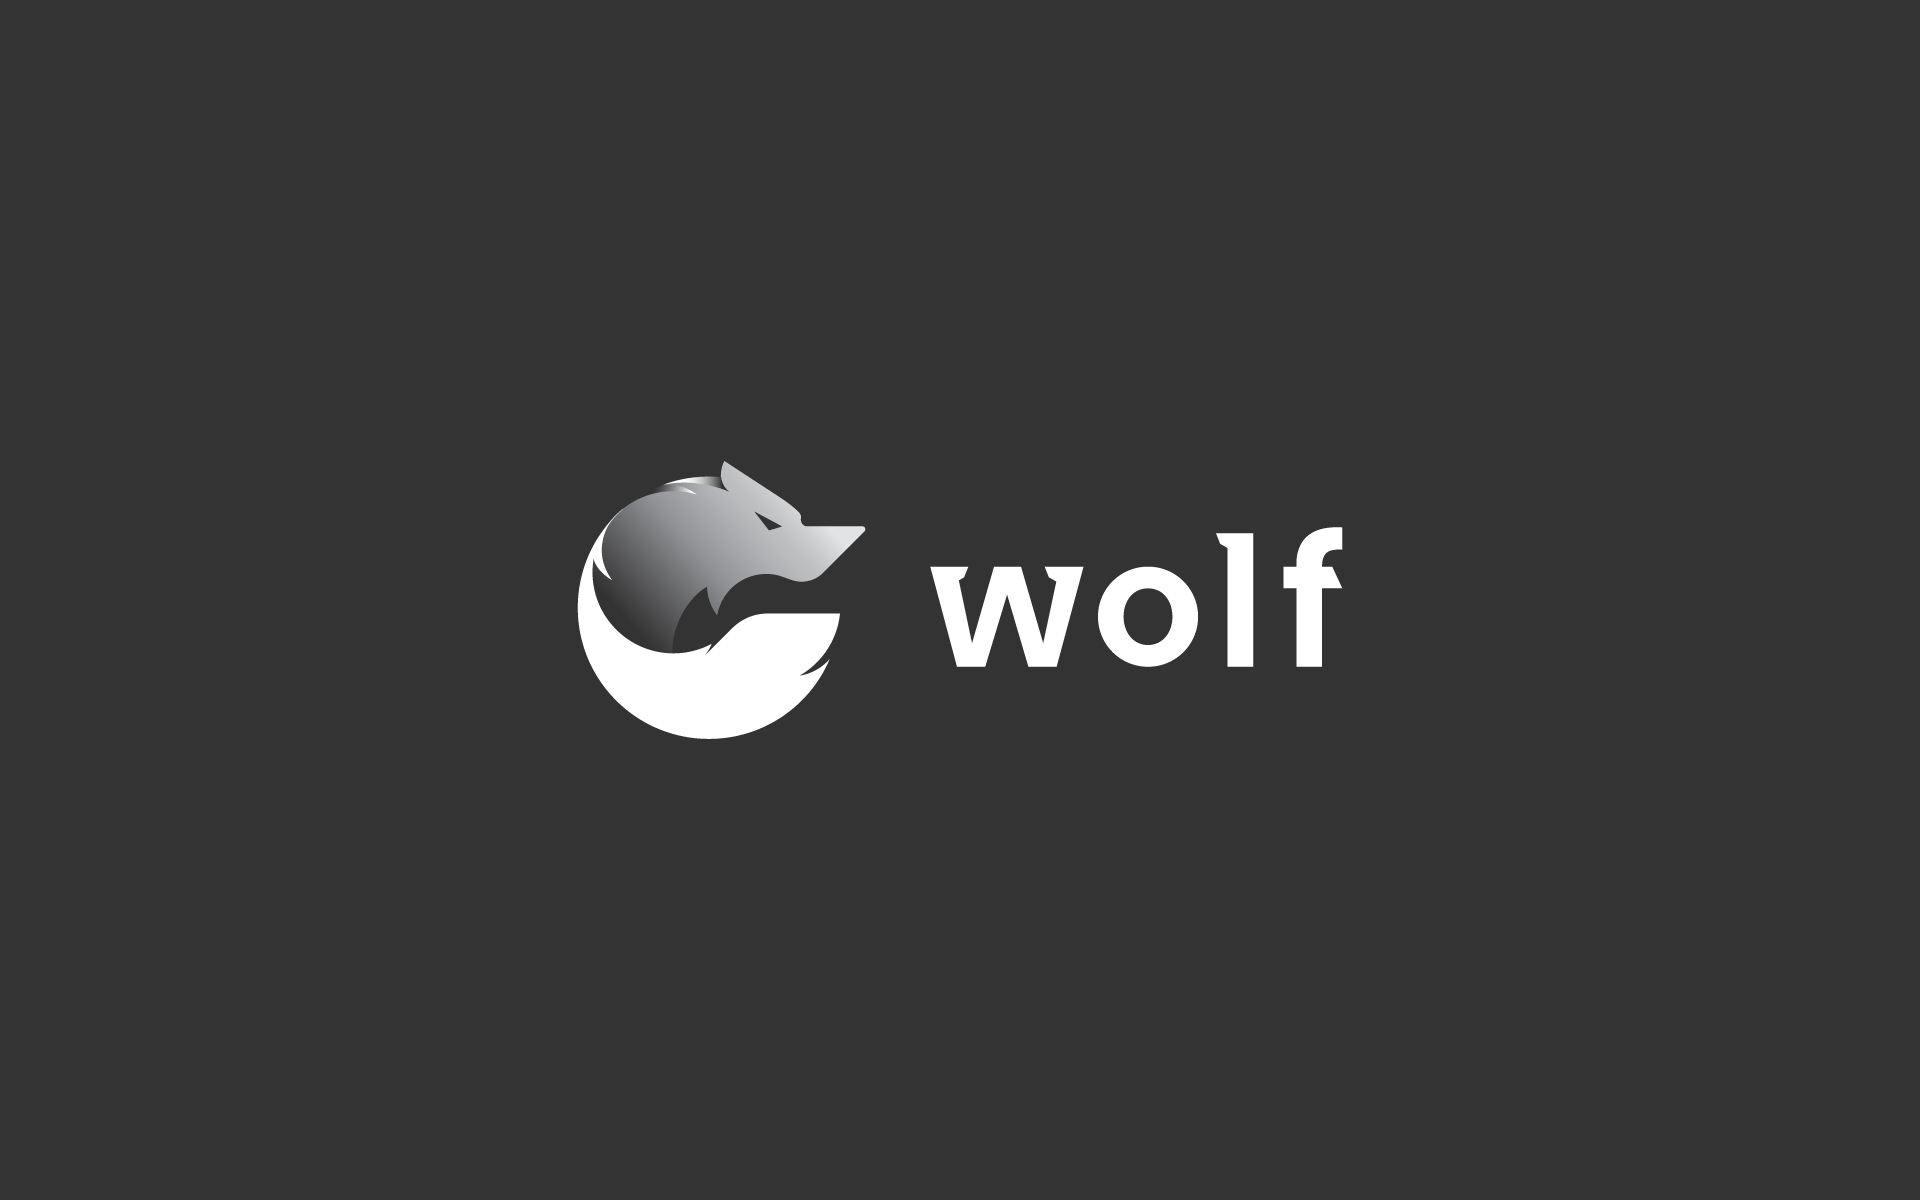 Logo for sale - wolf logo based on golden ratio